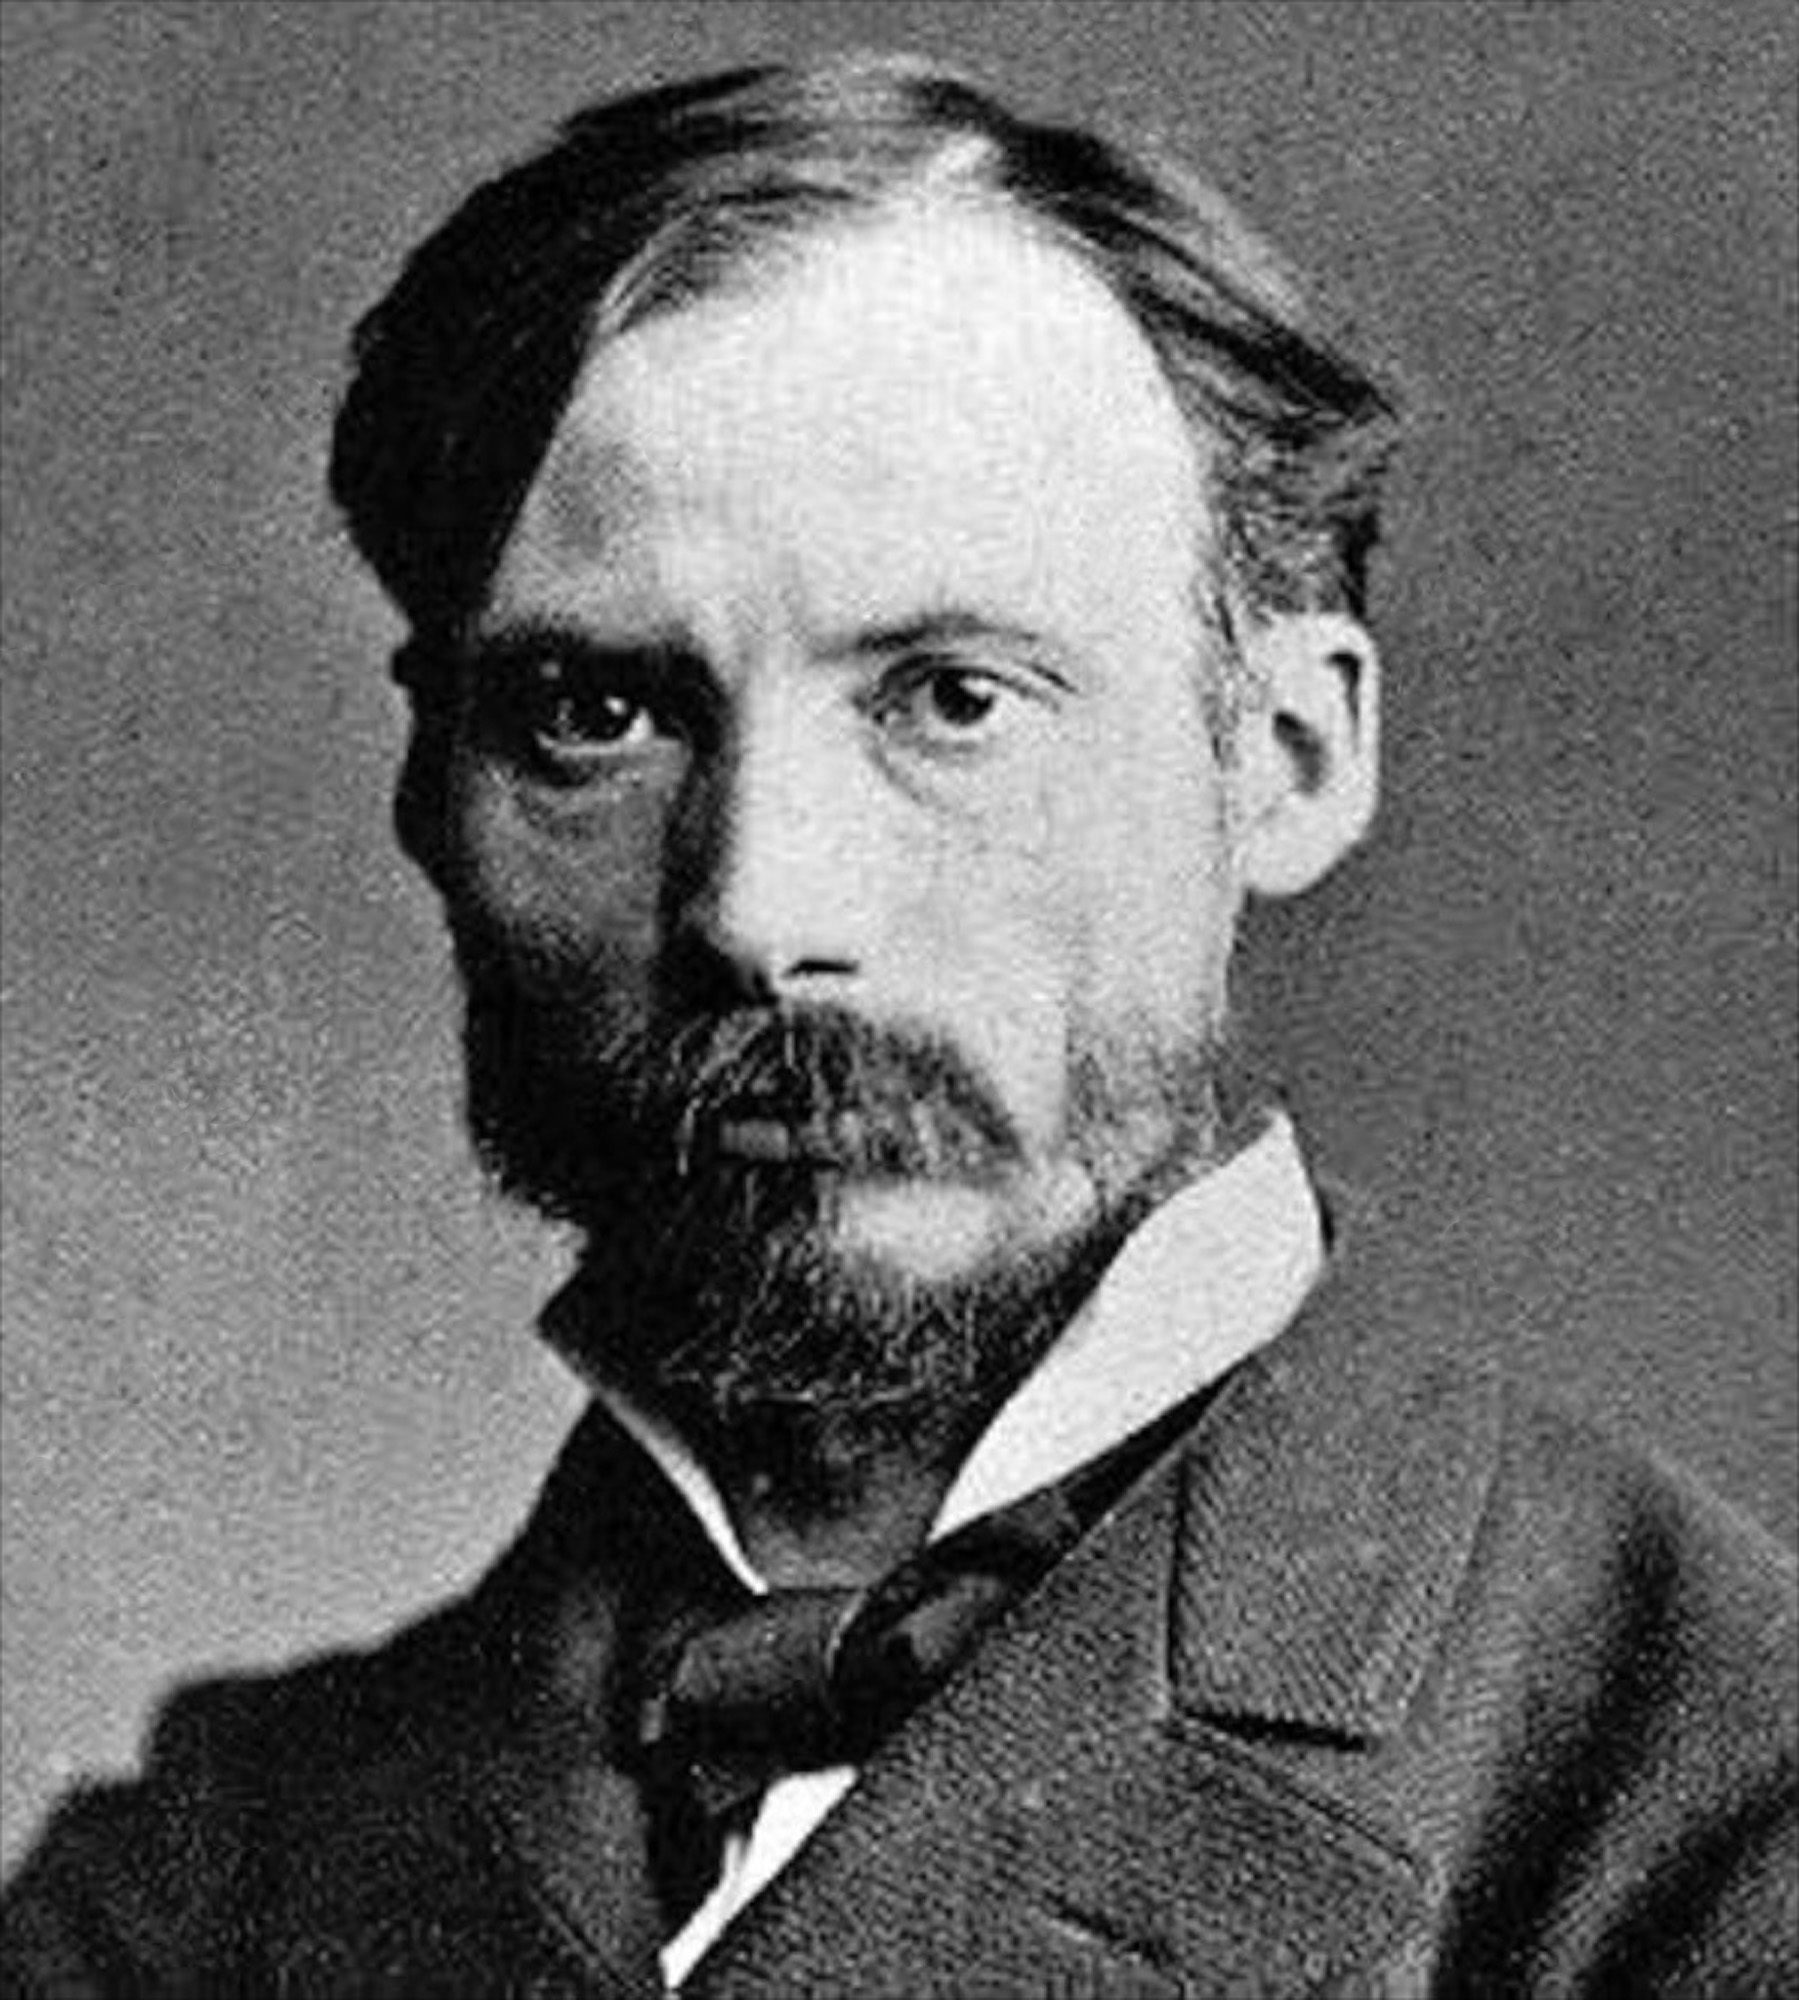 Pierre-Auguste Renoir Biography | Daily Dose of Art